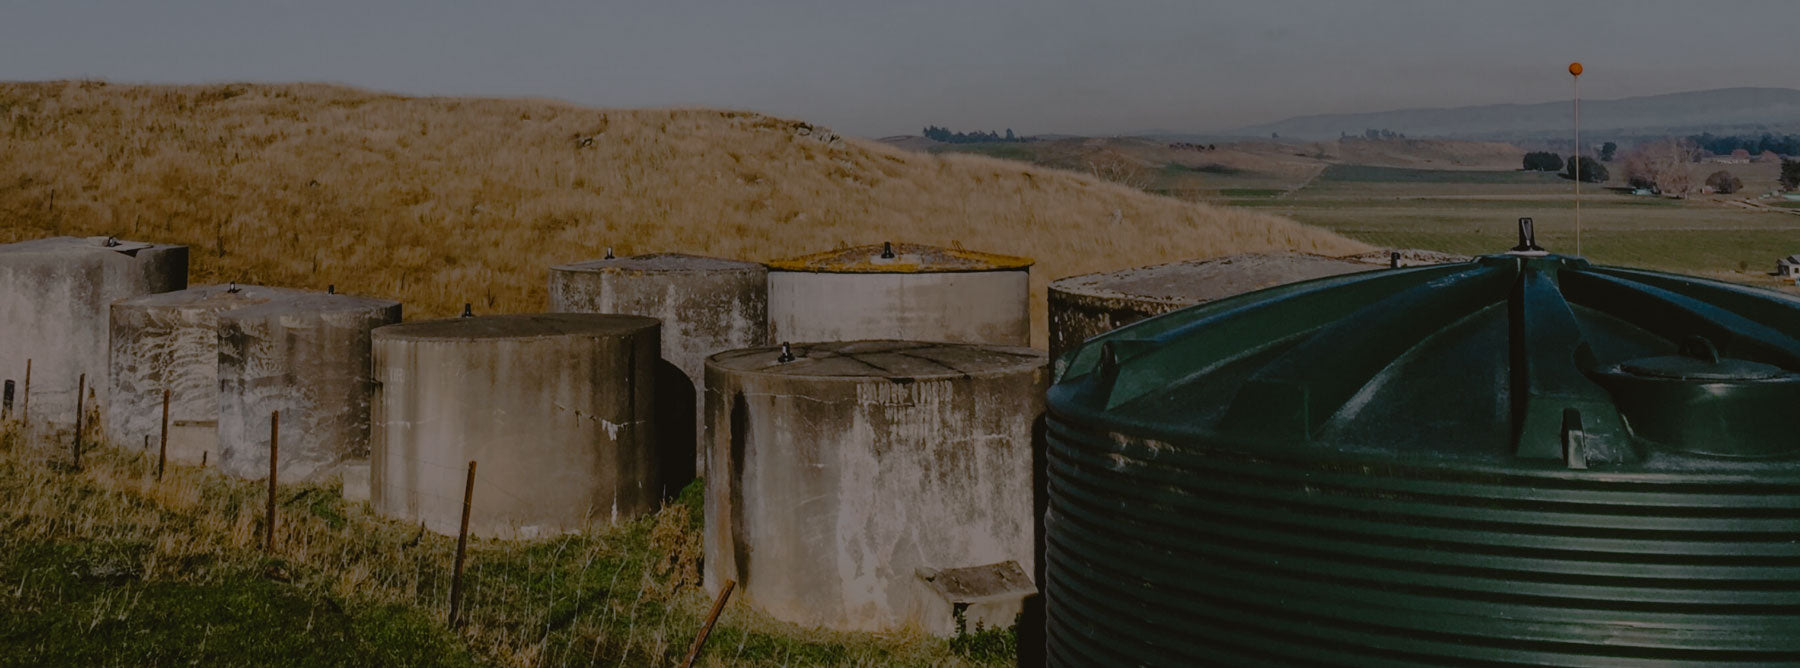 A rural water tank scheme